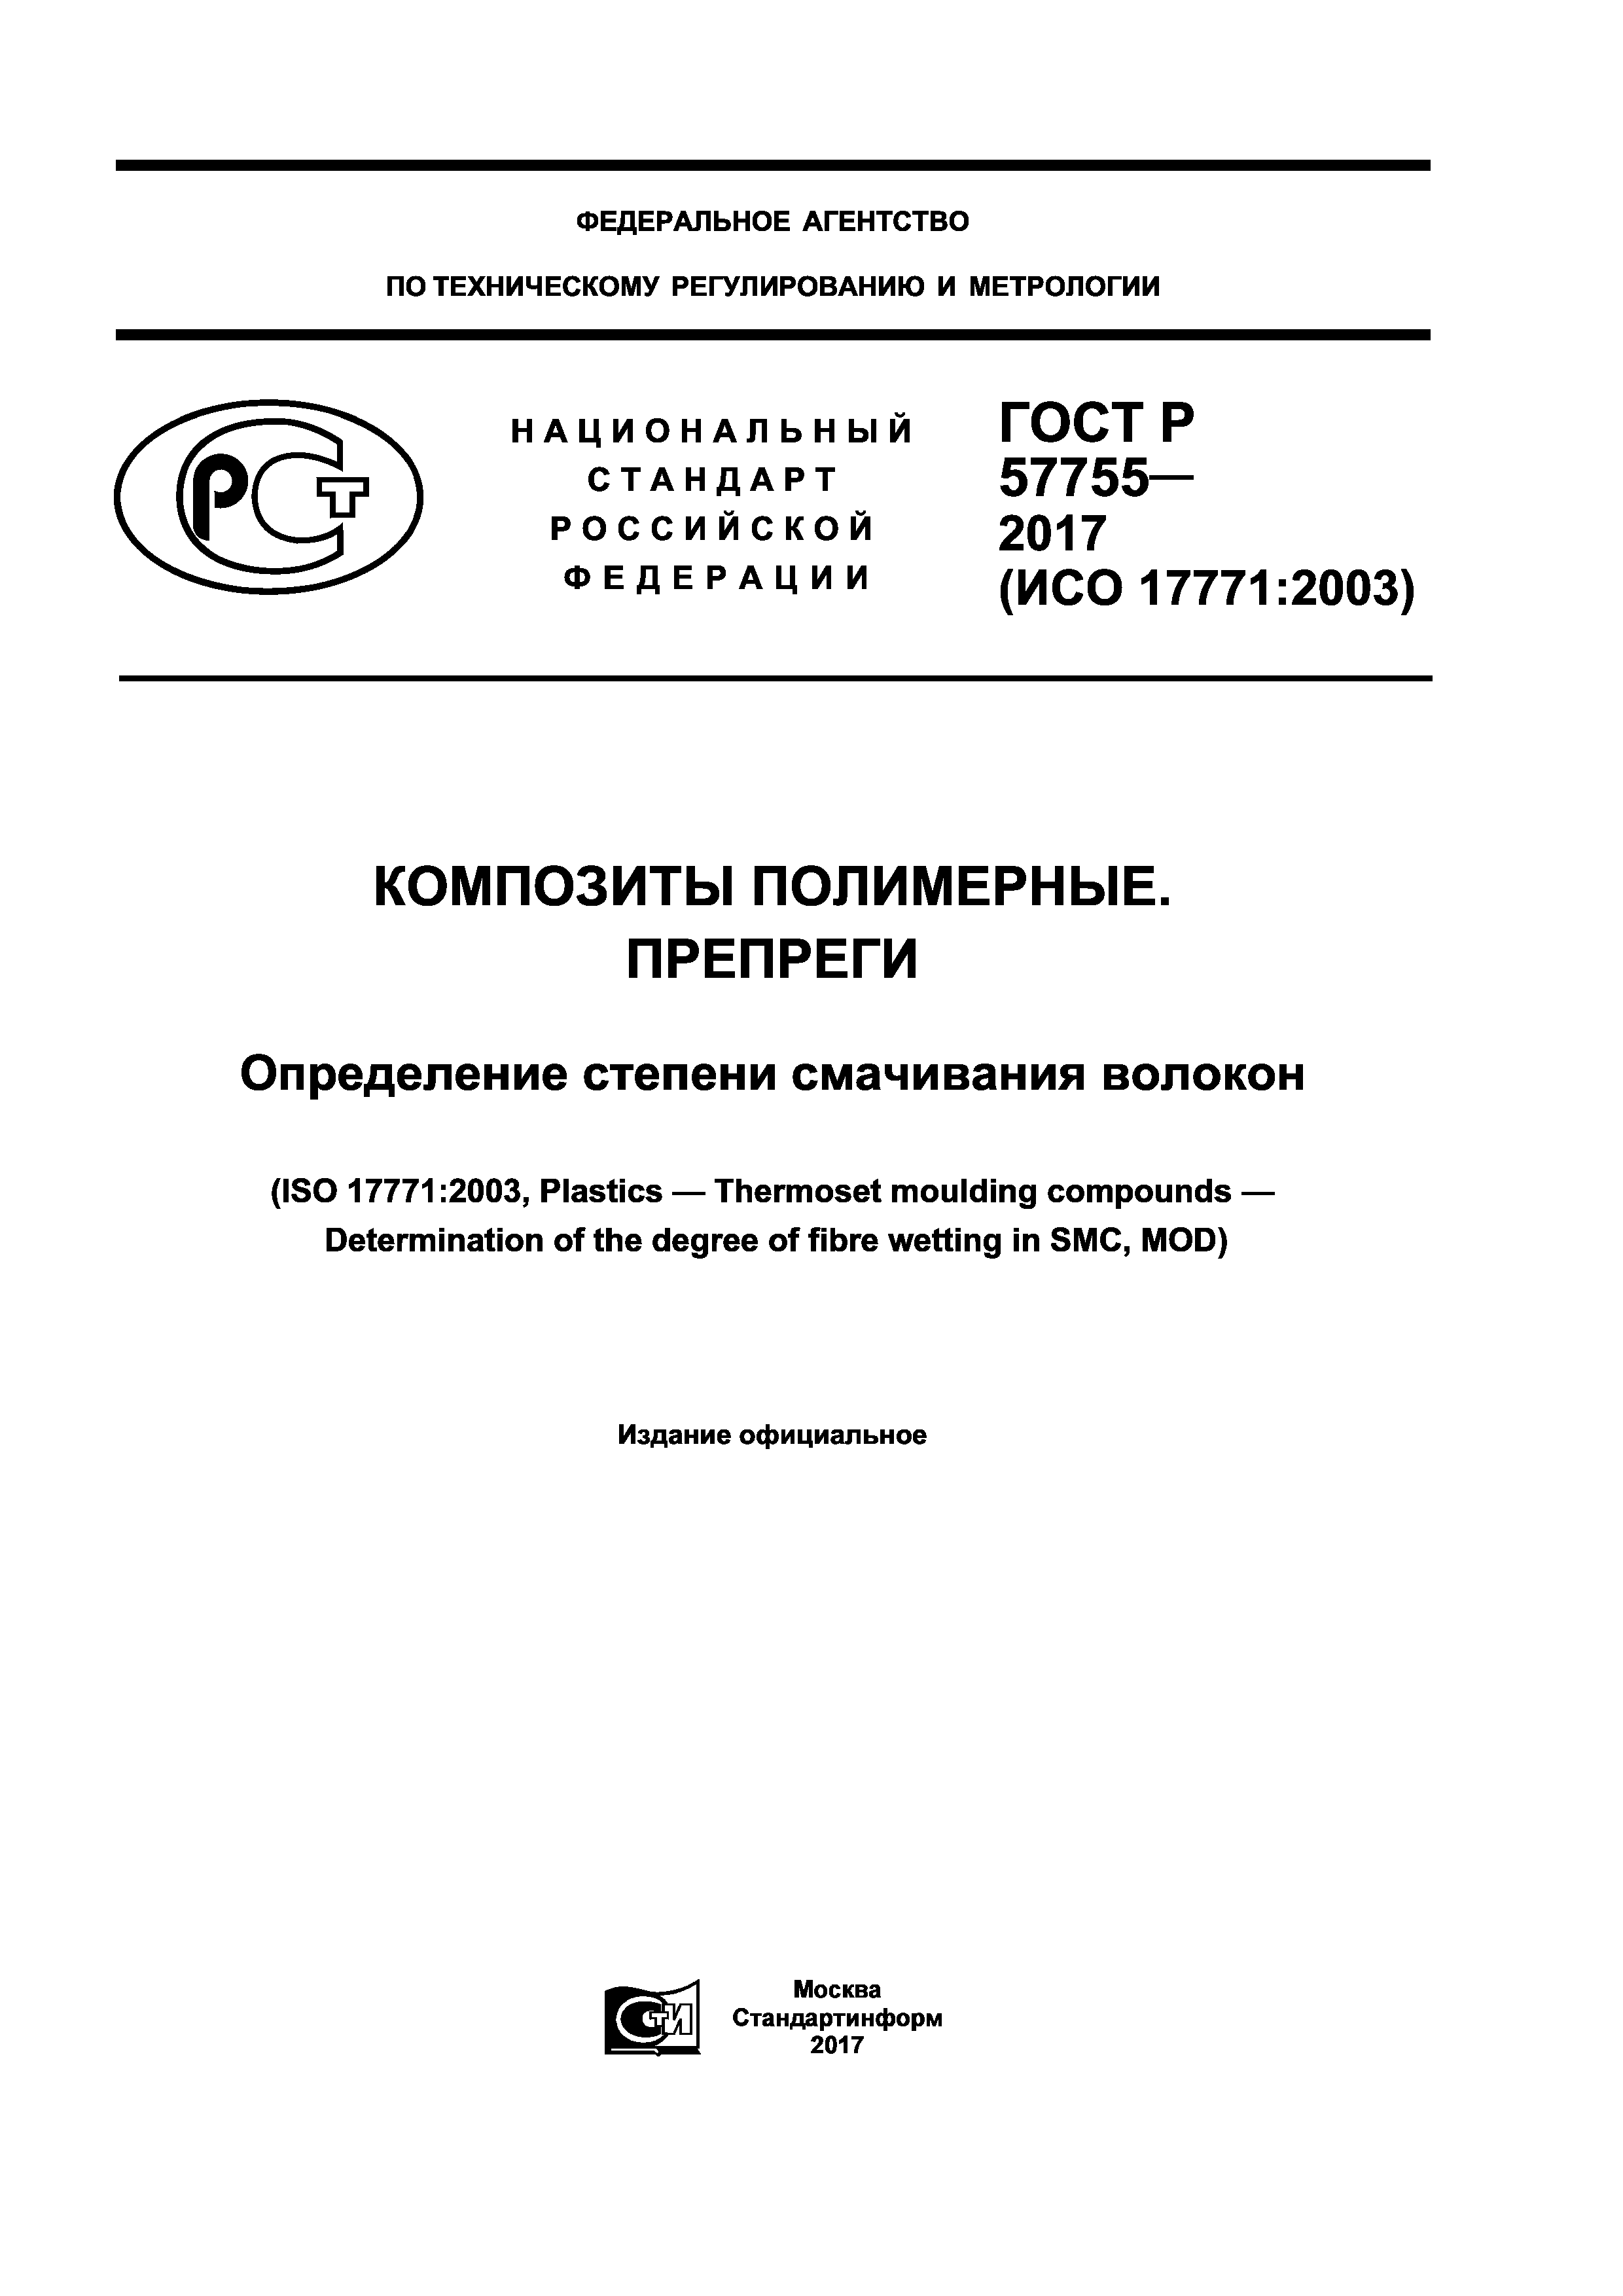 ГОСТ Р 57755-2017